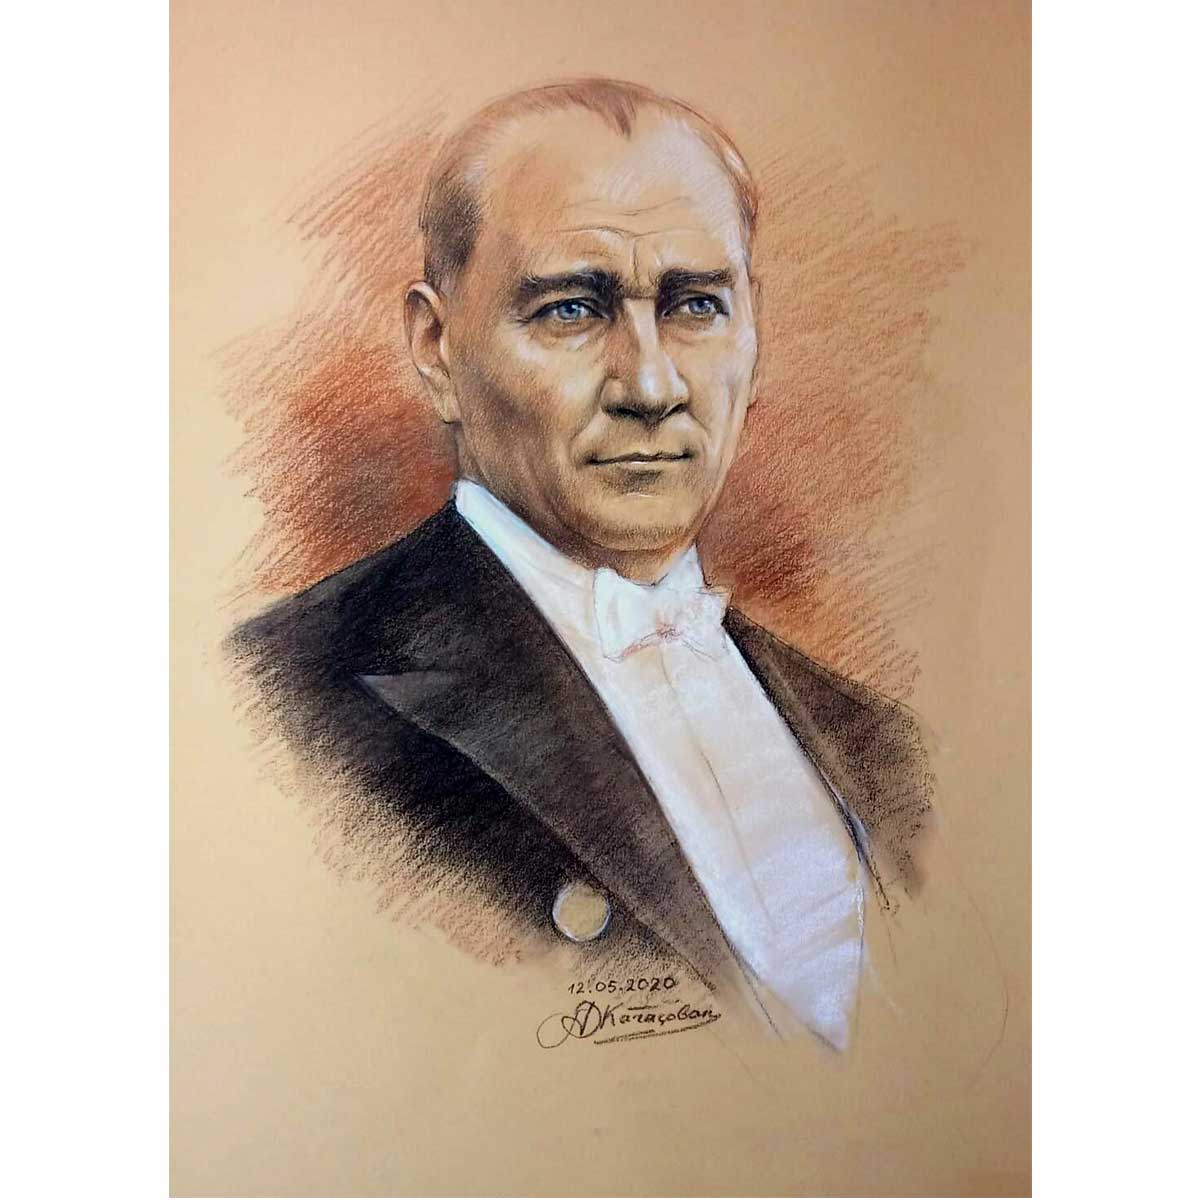 ATANAS KARAÇOBAN, Mustafa Kemal ATATÜRK, 2020